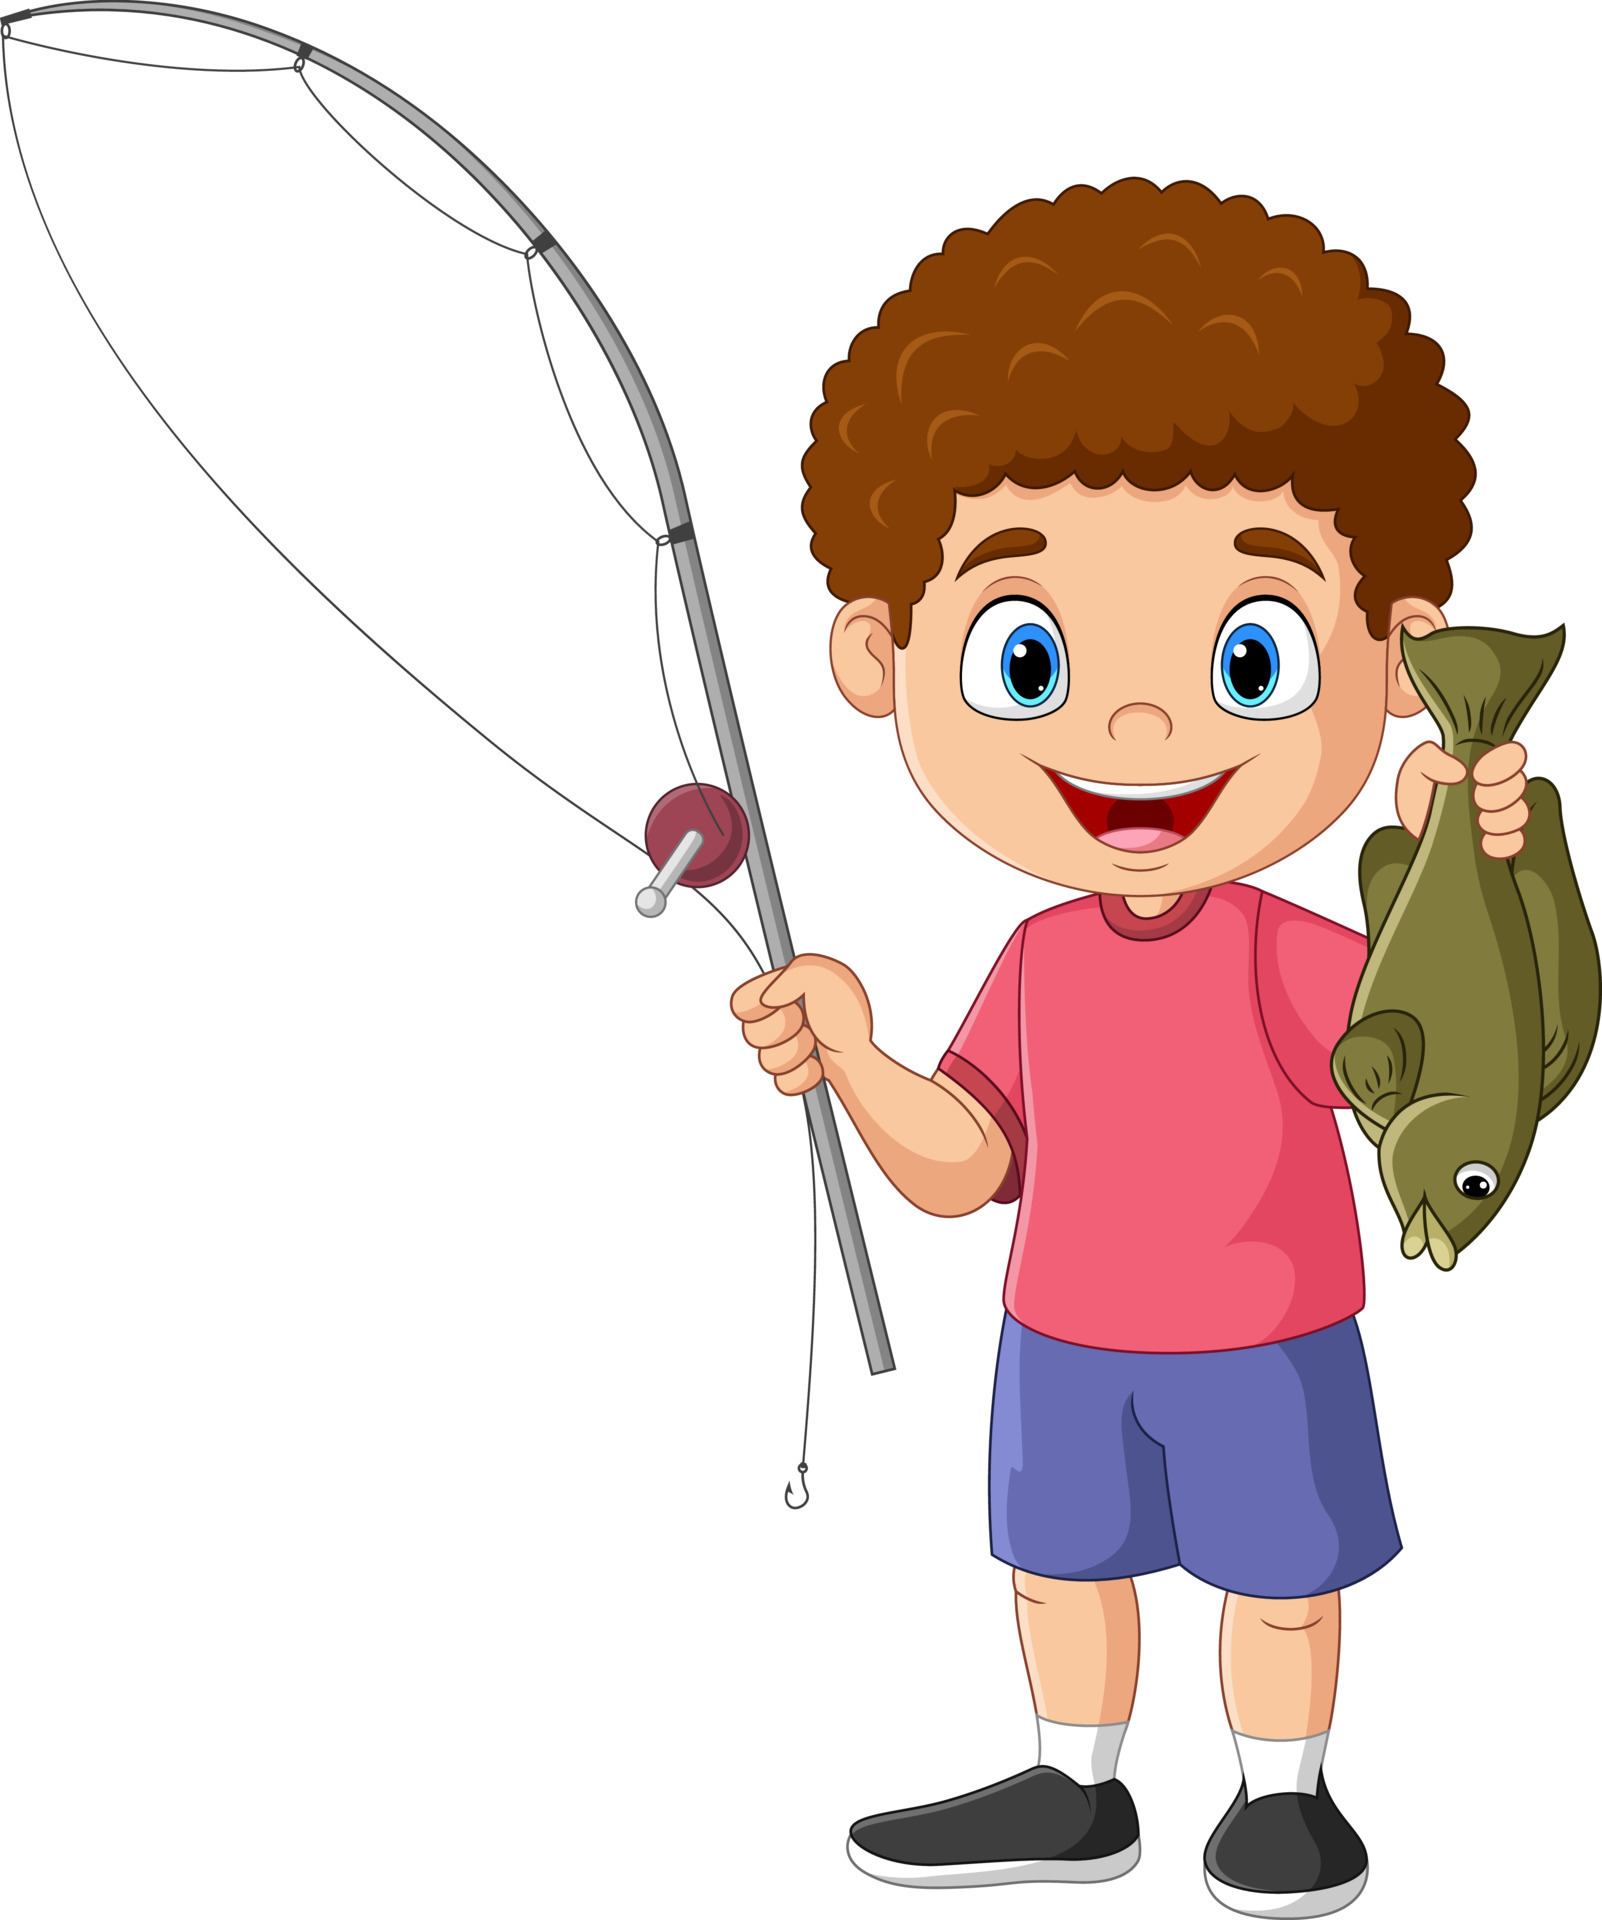 https://static.vecteezy.com/system/resources/previews/009/765/674/original/cartoon-happy-little-boy-fishing-vector.jpg